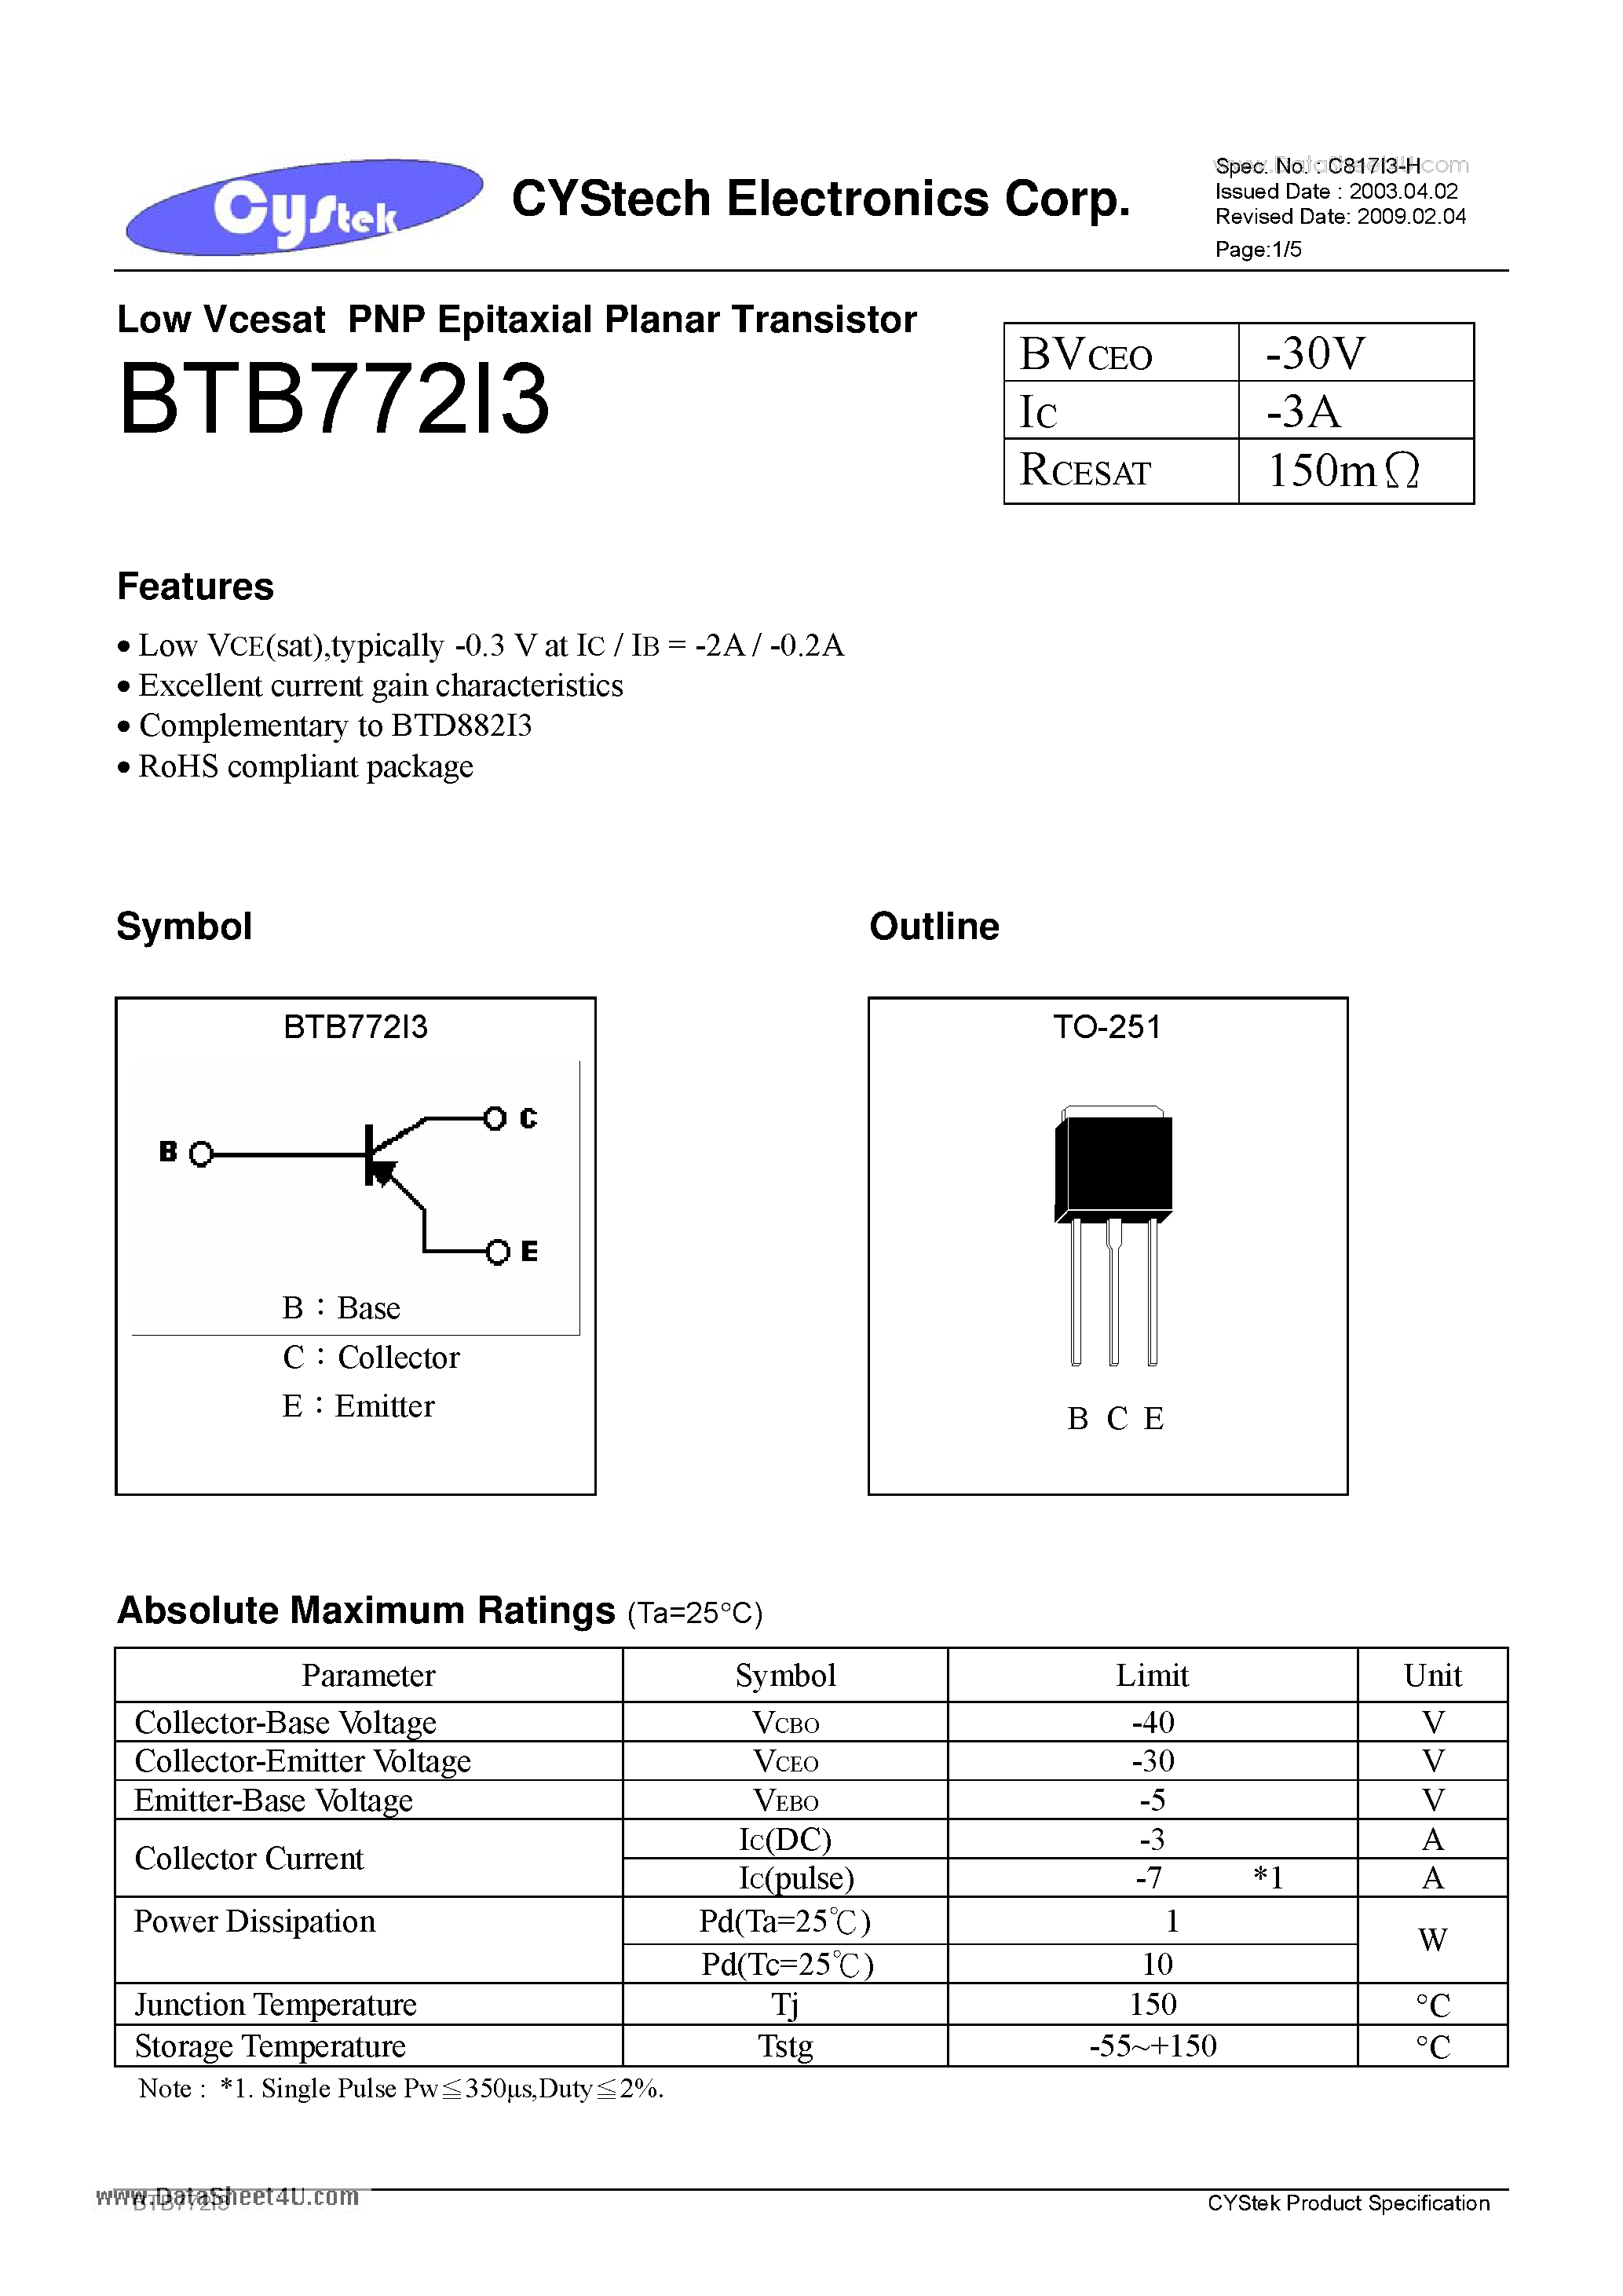 Datasheet BTB772I3 - Low Vcesat PNP Epitaxial Planar Transistor page 1